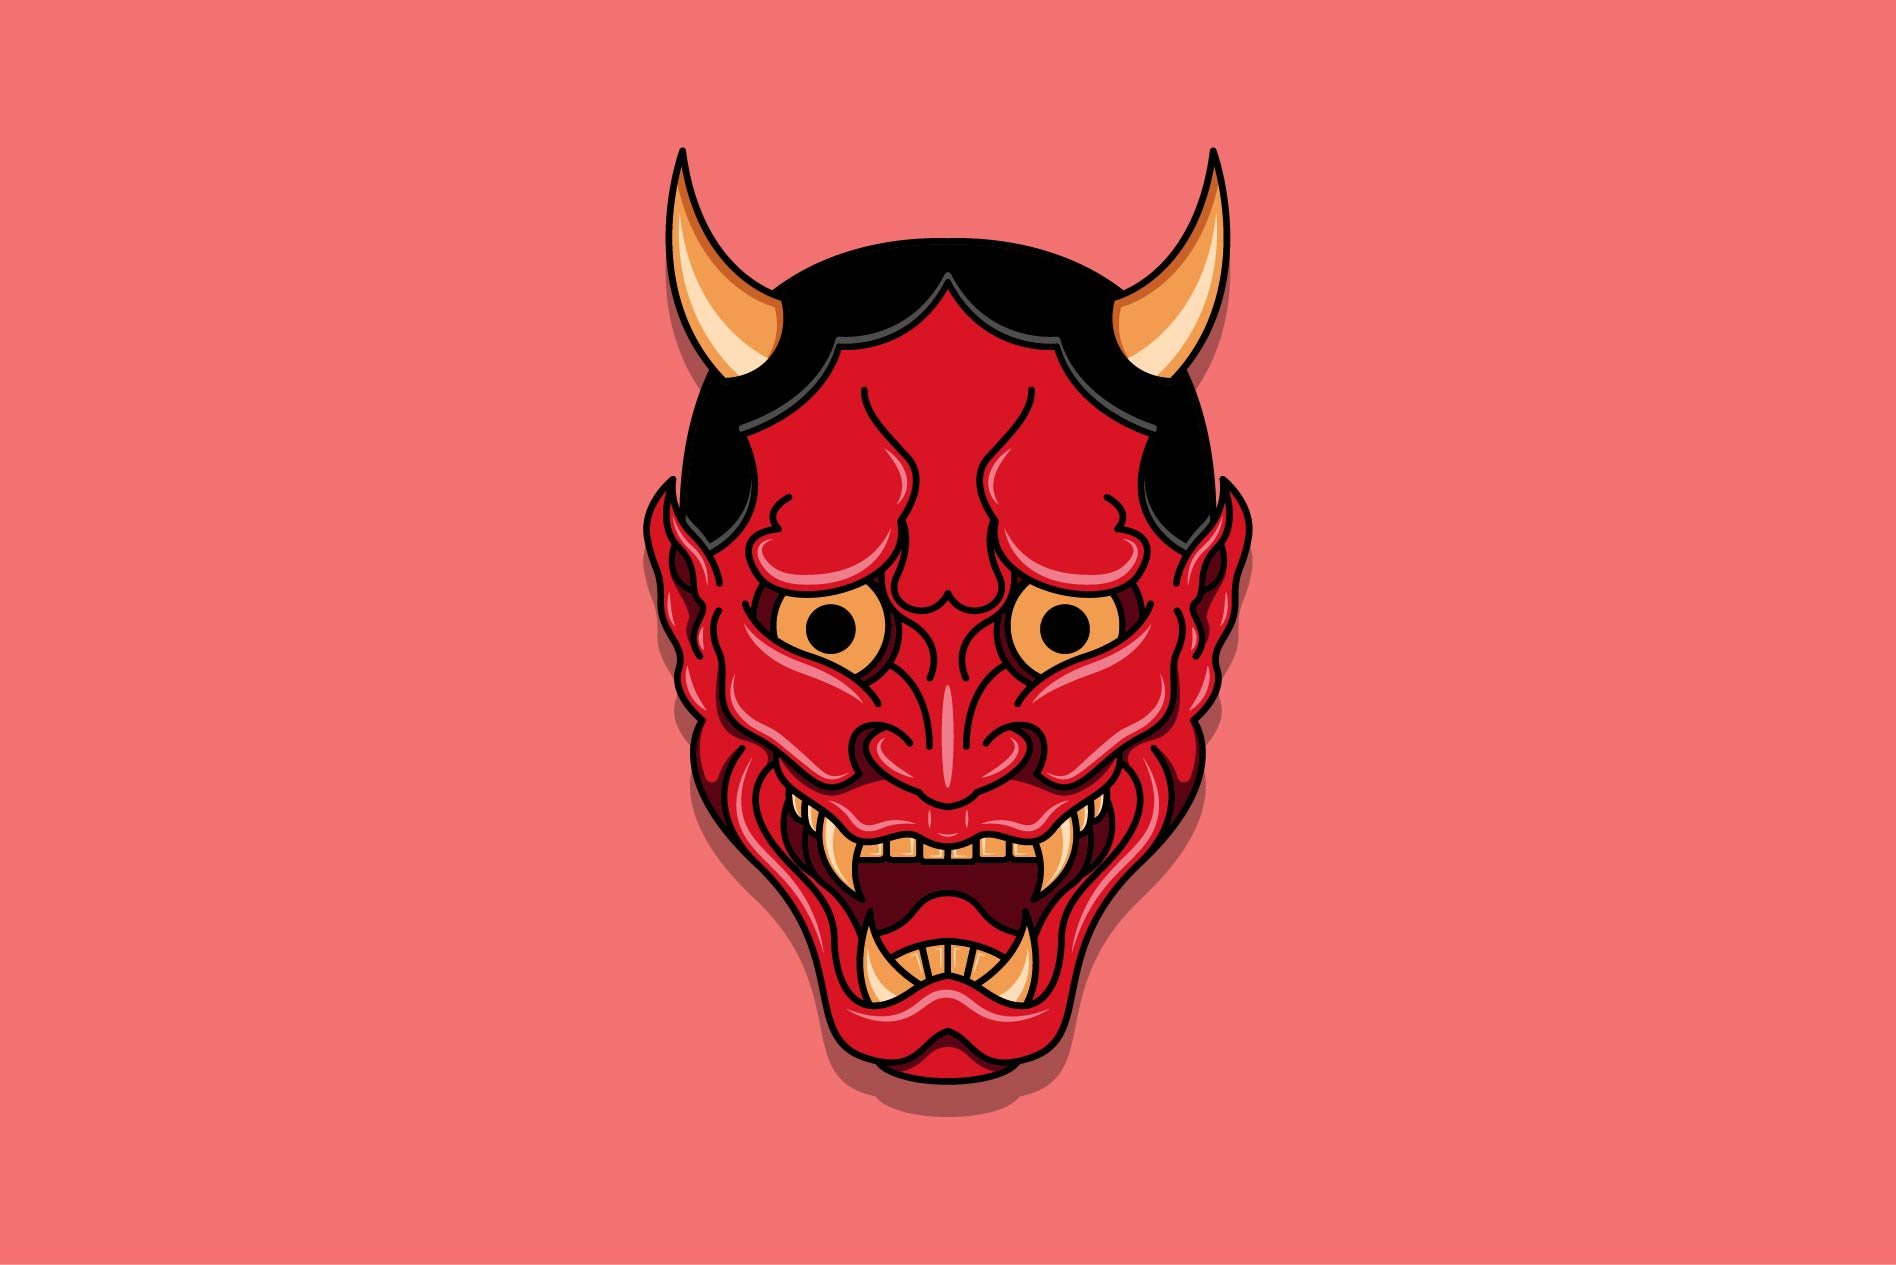 Oni japanese devil mask #08 cover image.